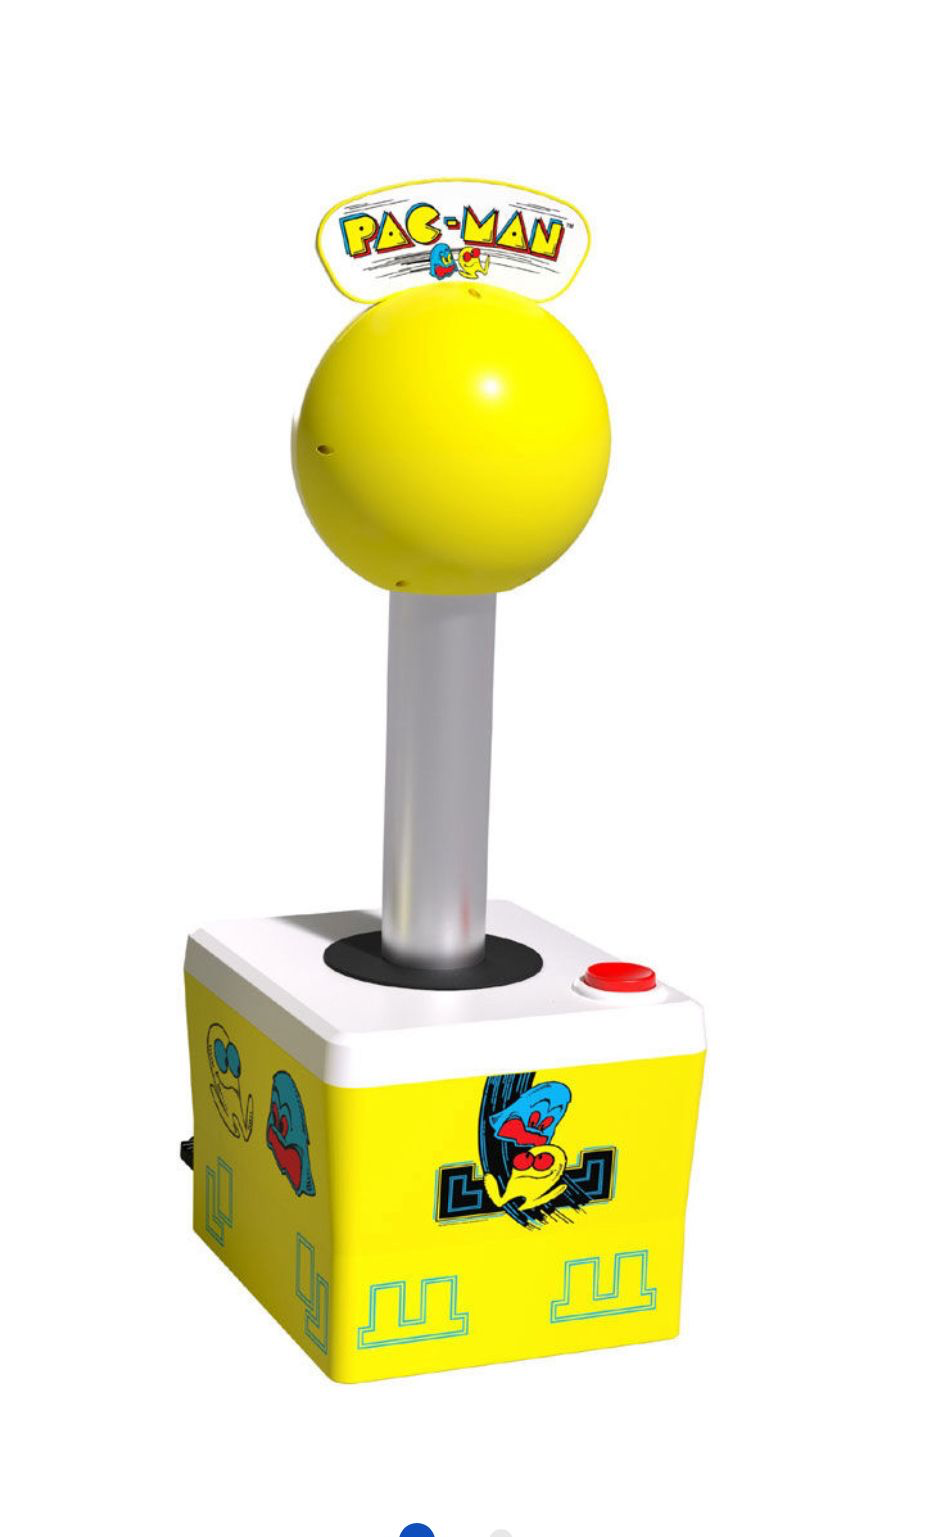 nba-jam-arcade-machine image